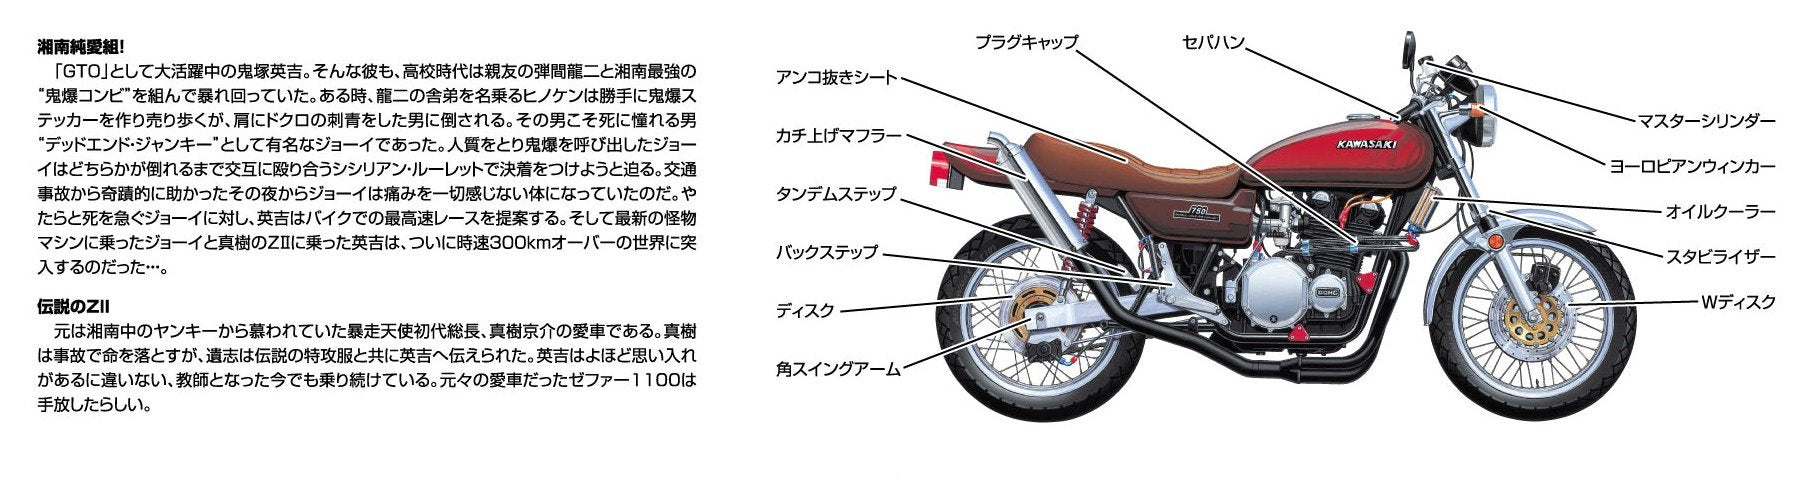 AOSHIMA 05613 Shonan Lovers Gto The Zii Of Legend Motorrad-Bausatz im Maßstab 1:12